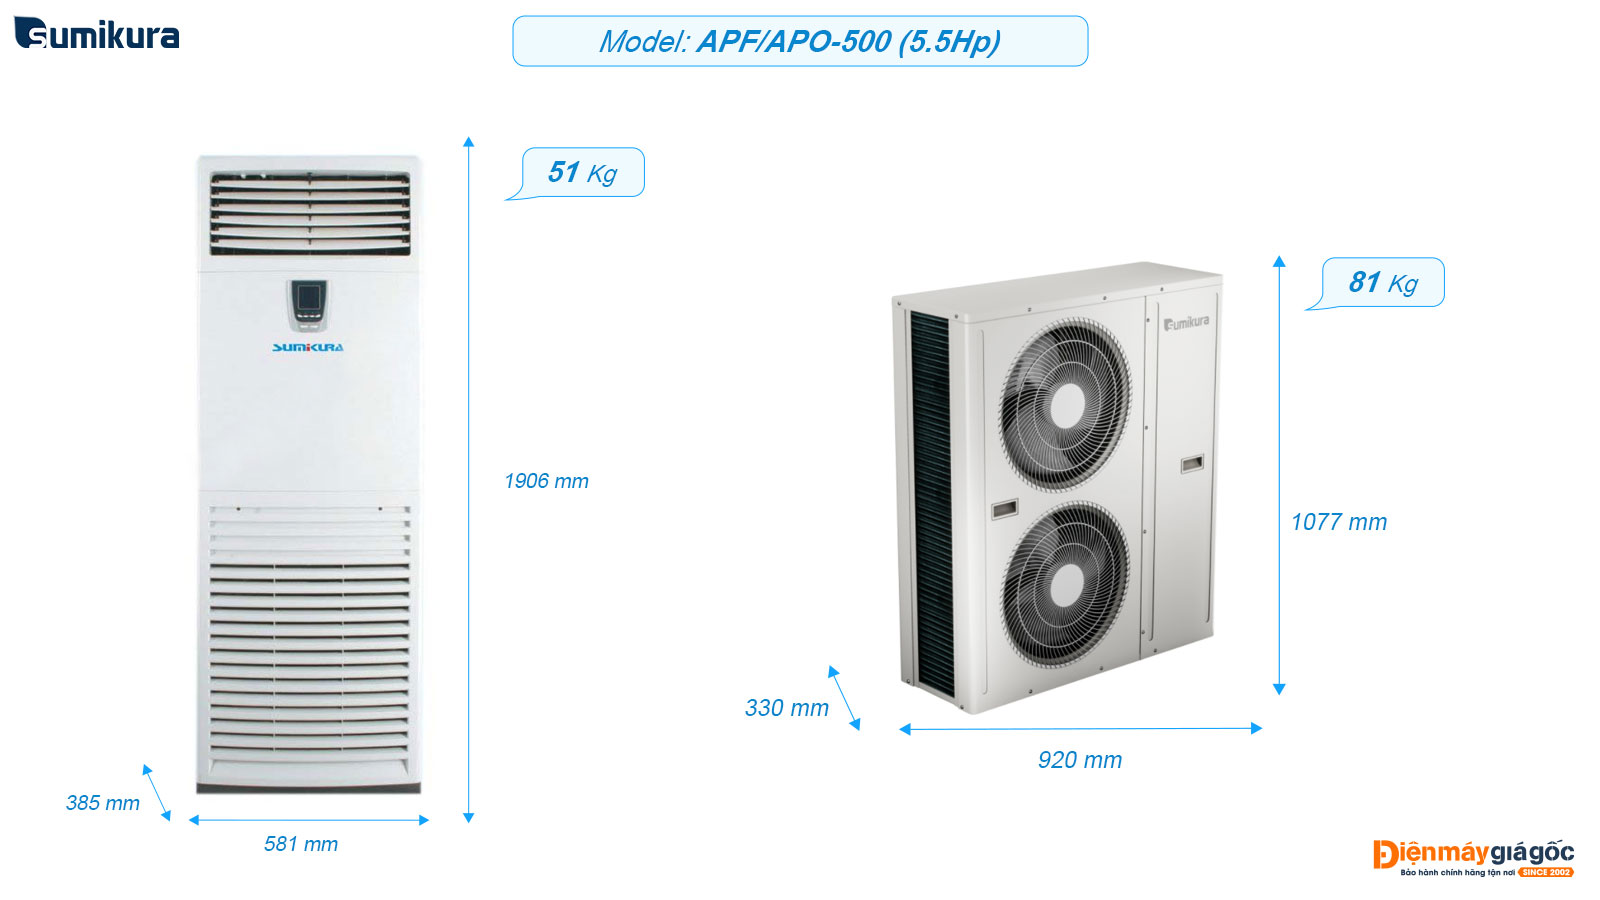 Sumikura Floor standing air conditioning APF/APO-500 (5.5Hp) - Gas R410A